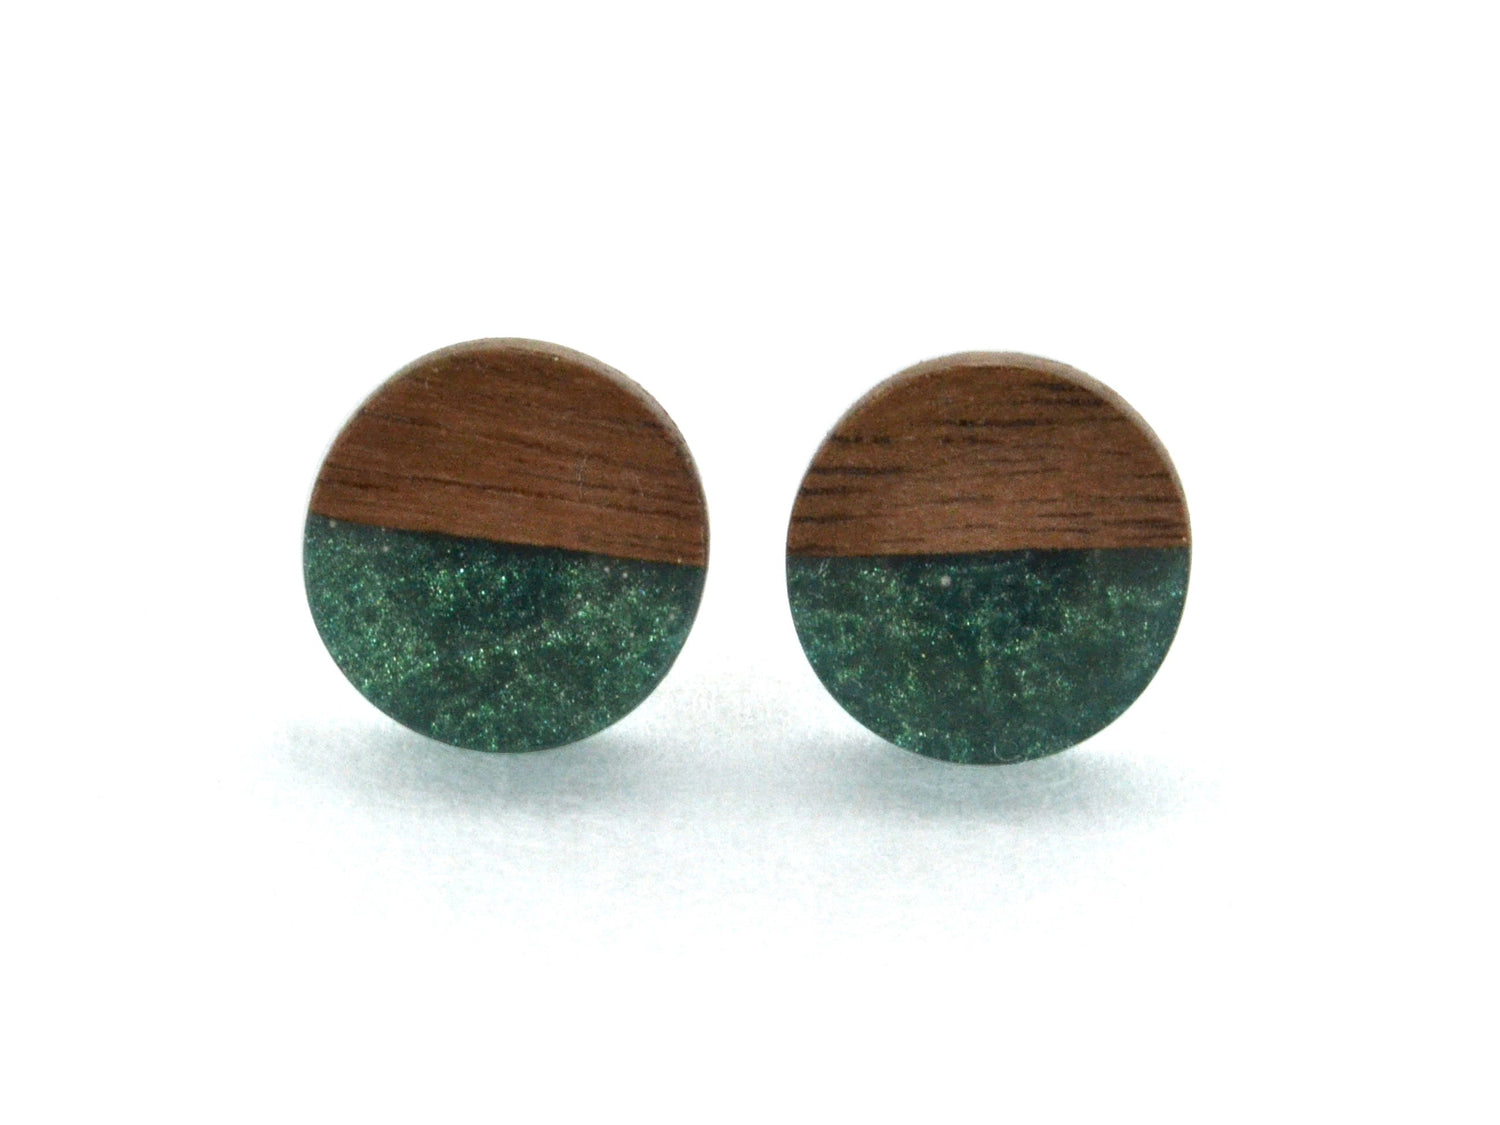 forest green and dark walnut round earring studs, half moon accent design